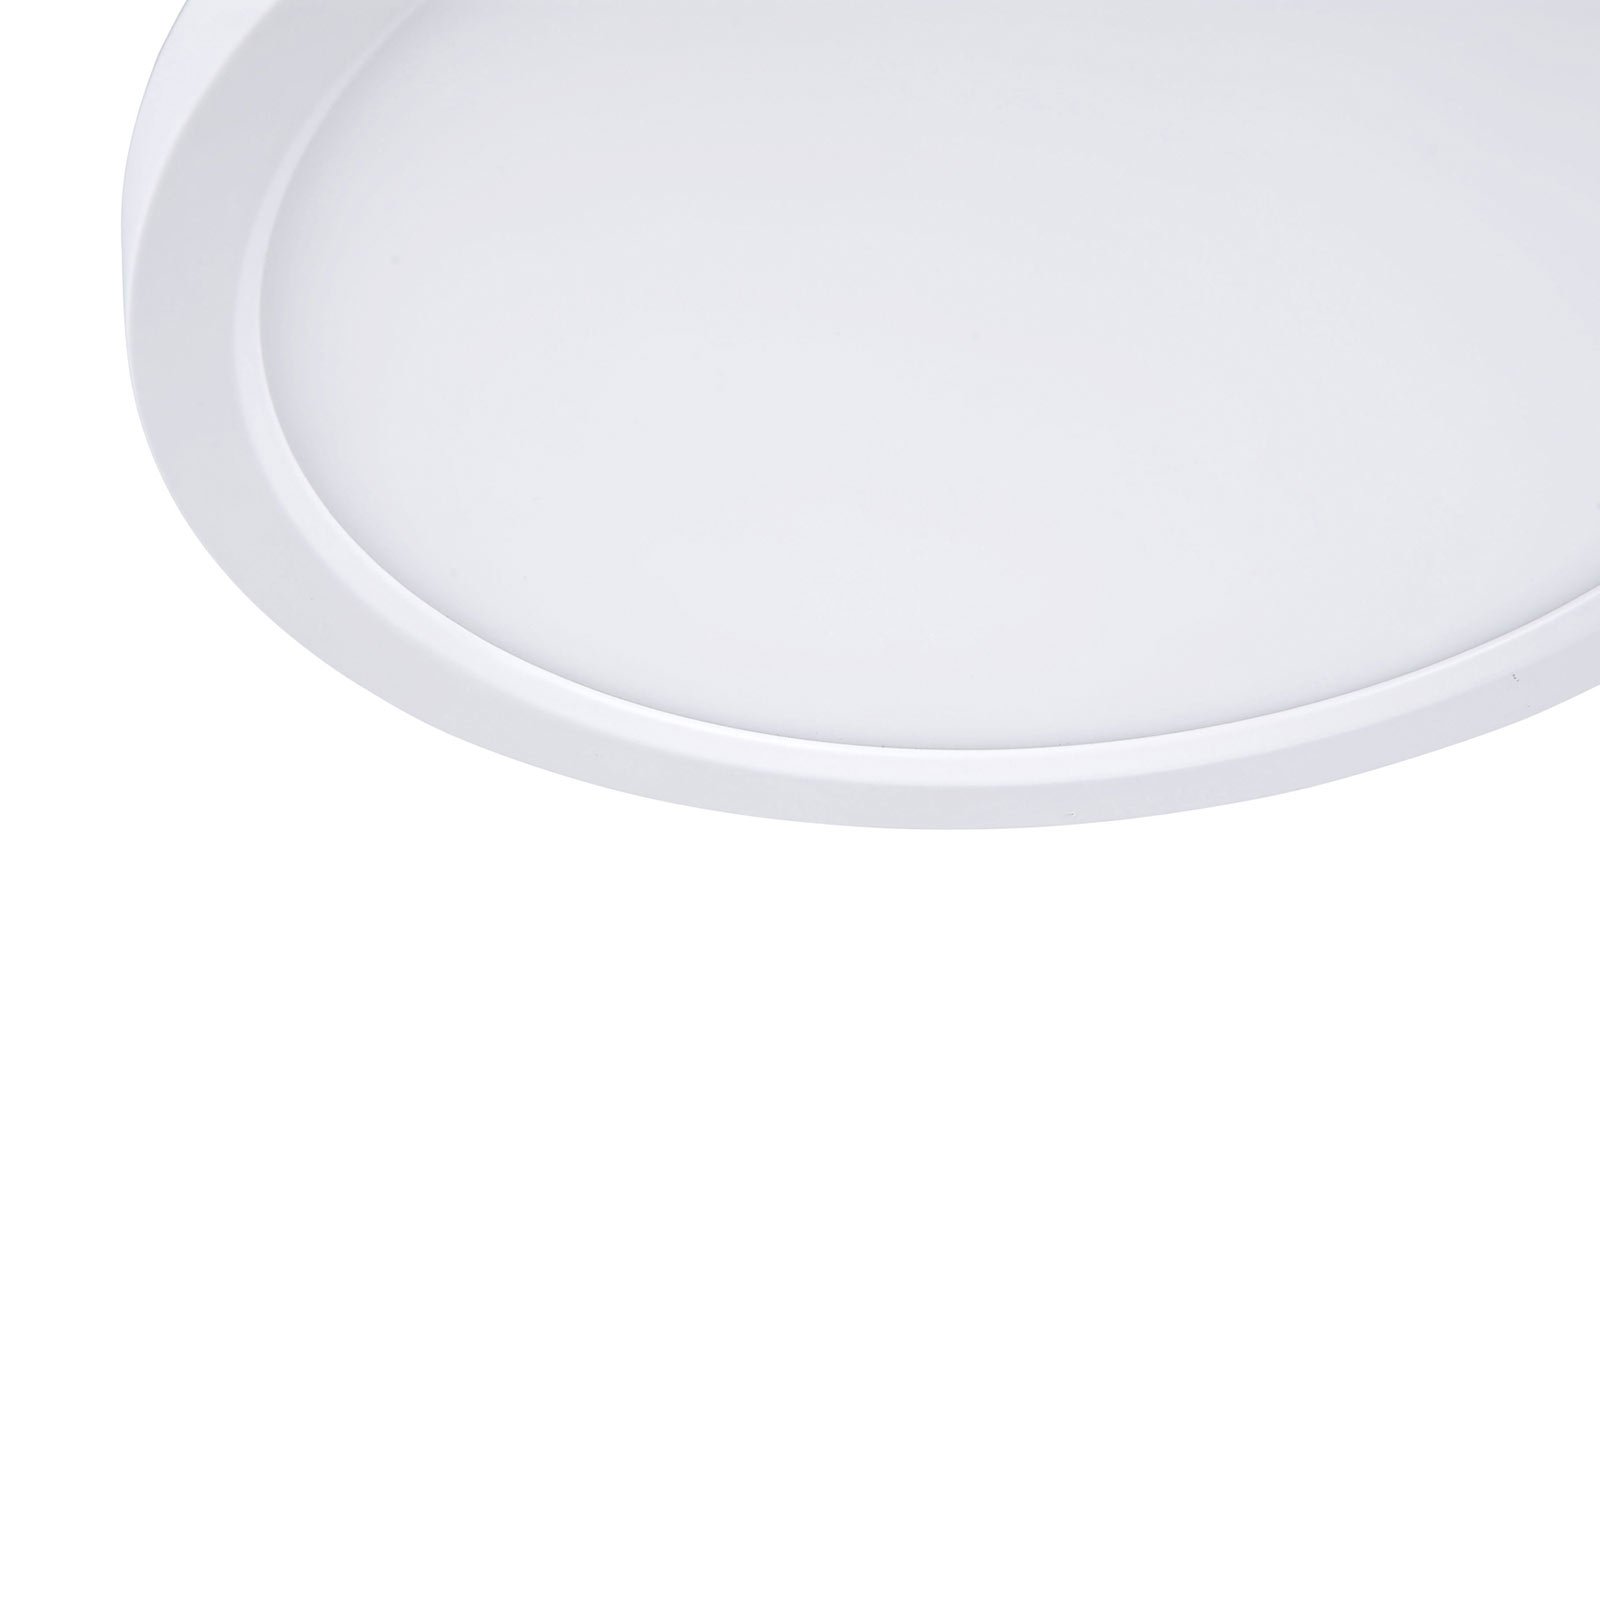 LED plafondlamp Flat CCT, Ø 40 cm, wit